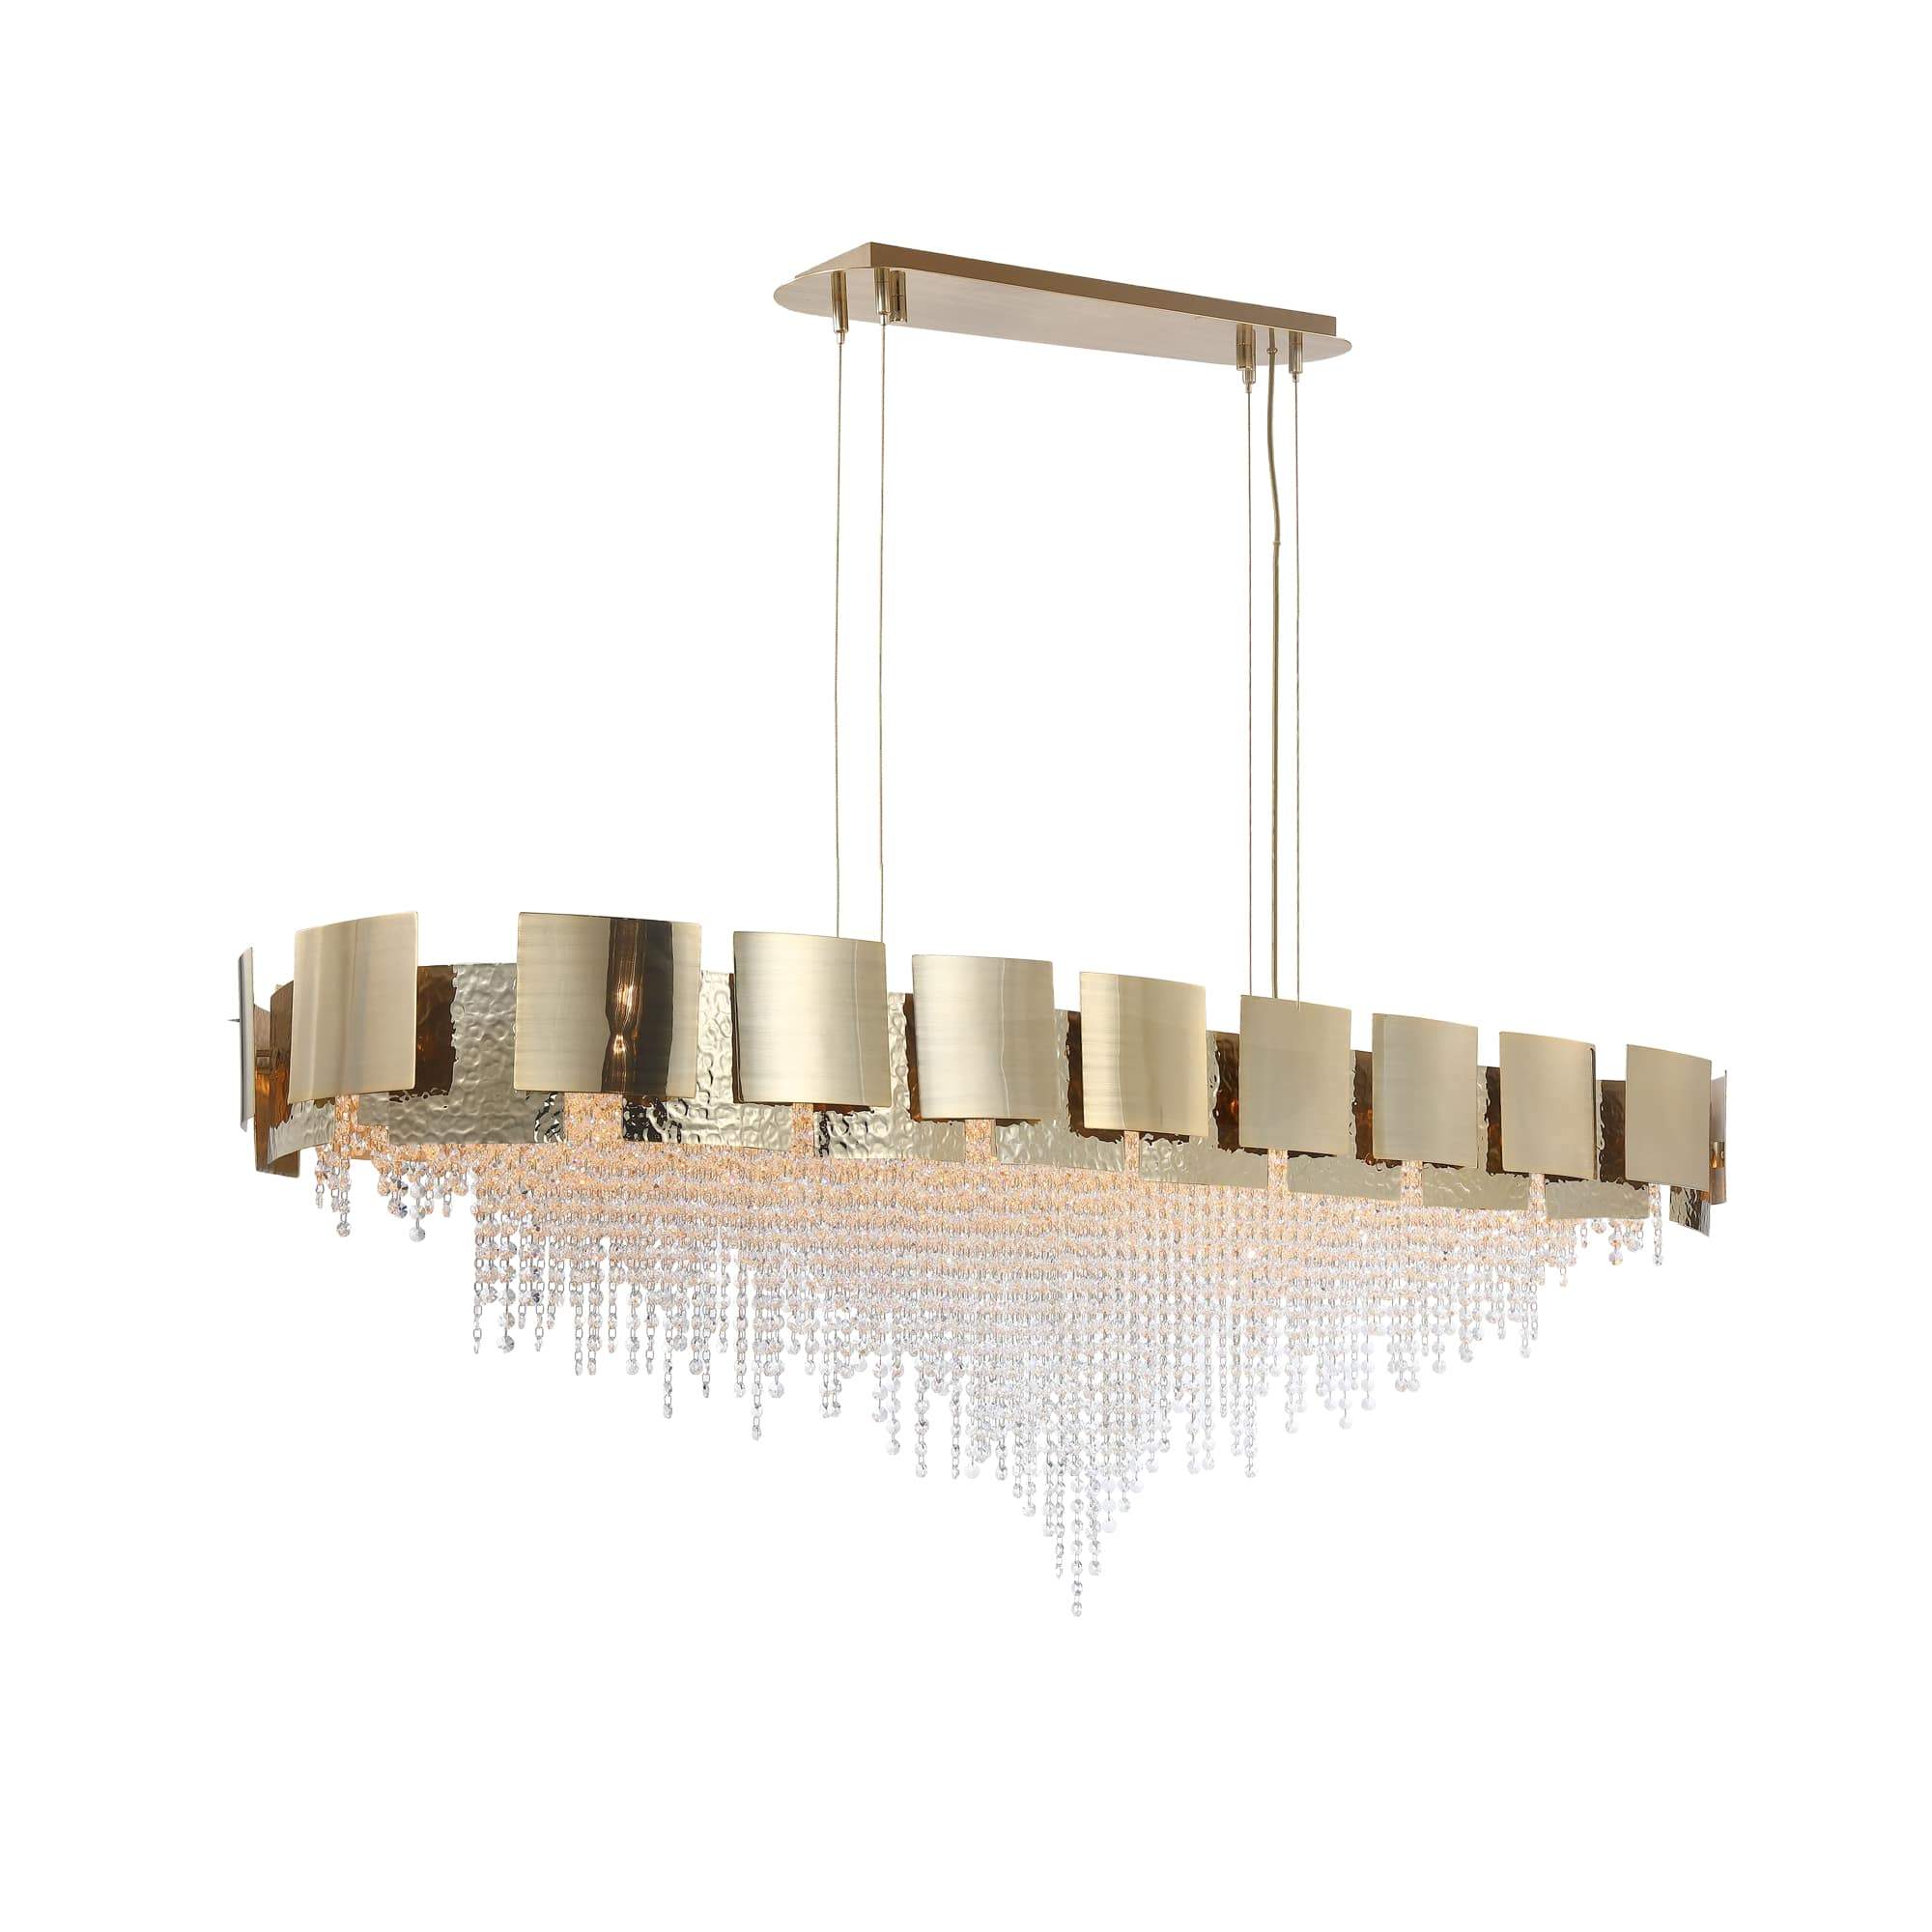 Anastagio Rectangle/ Linear Brass Crystal Bead Chandelier - Italian Concept - 